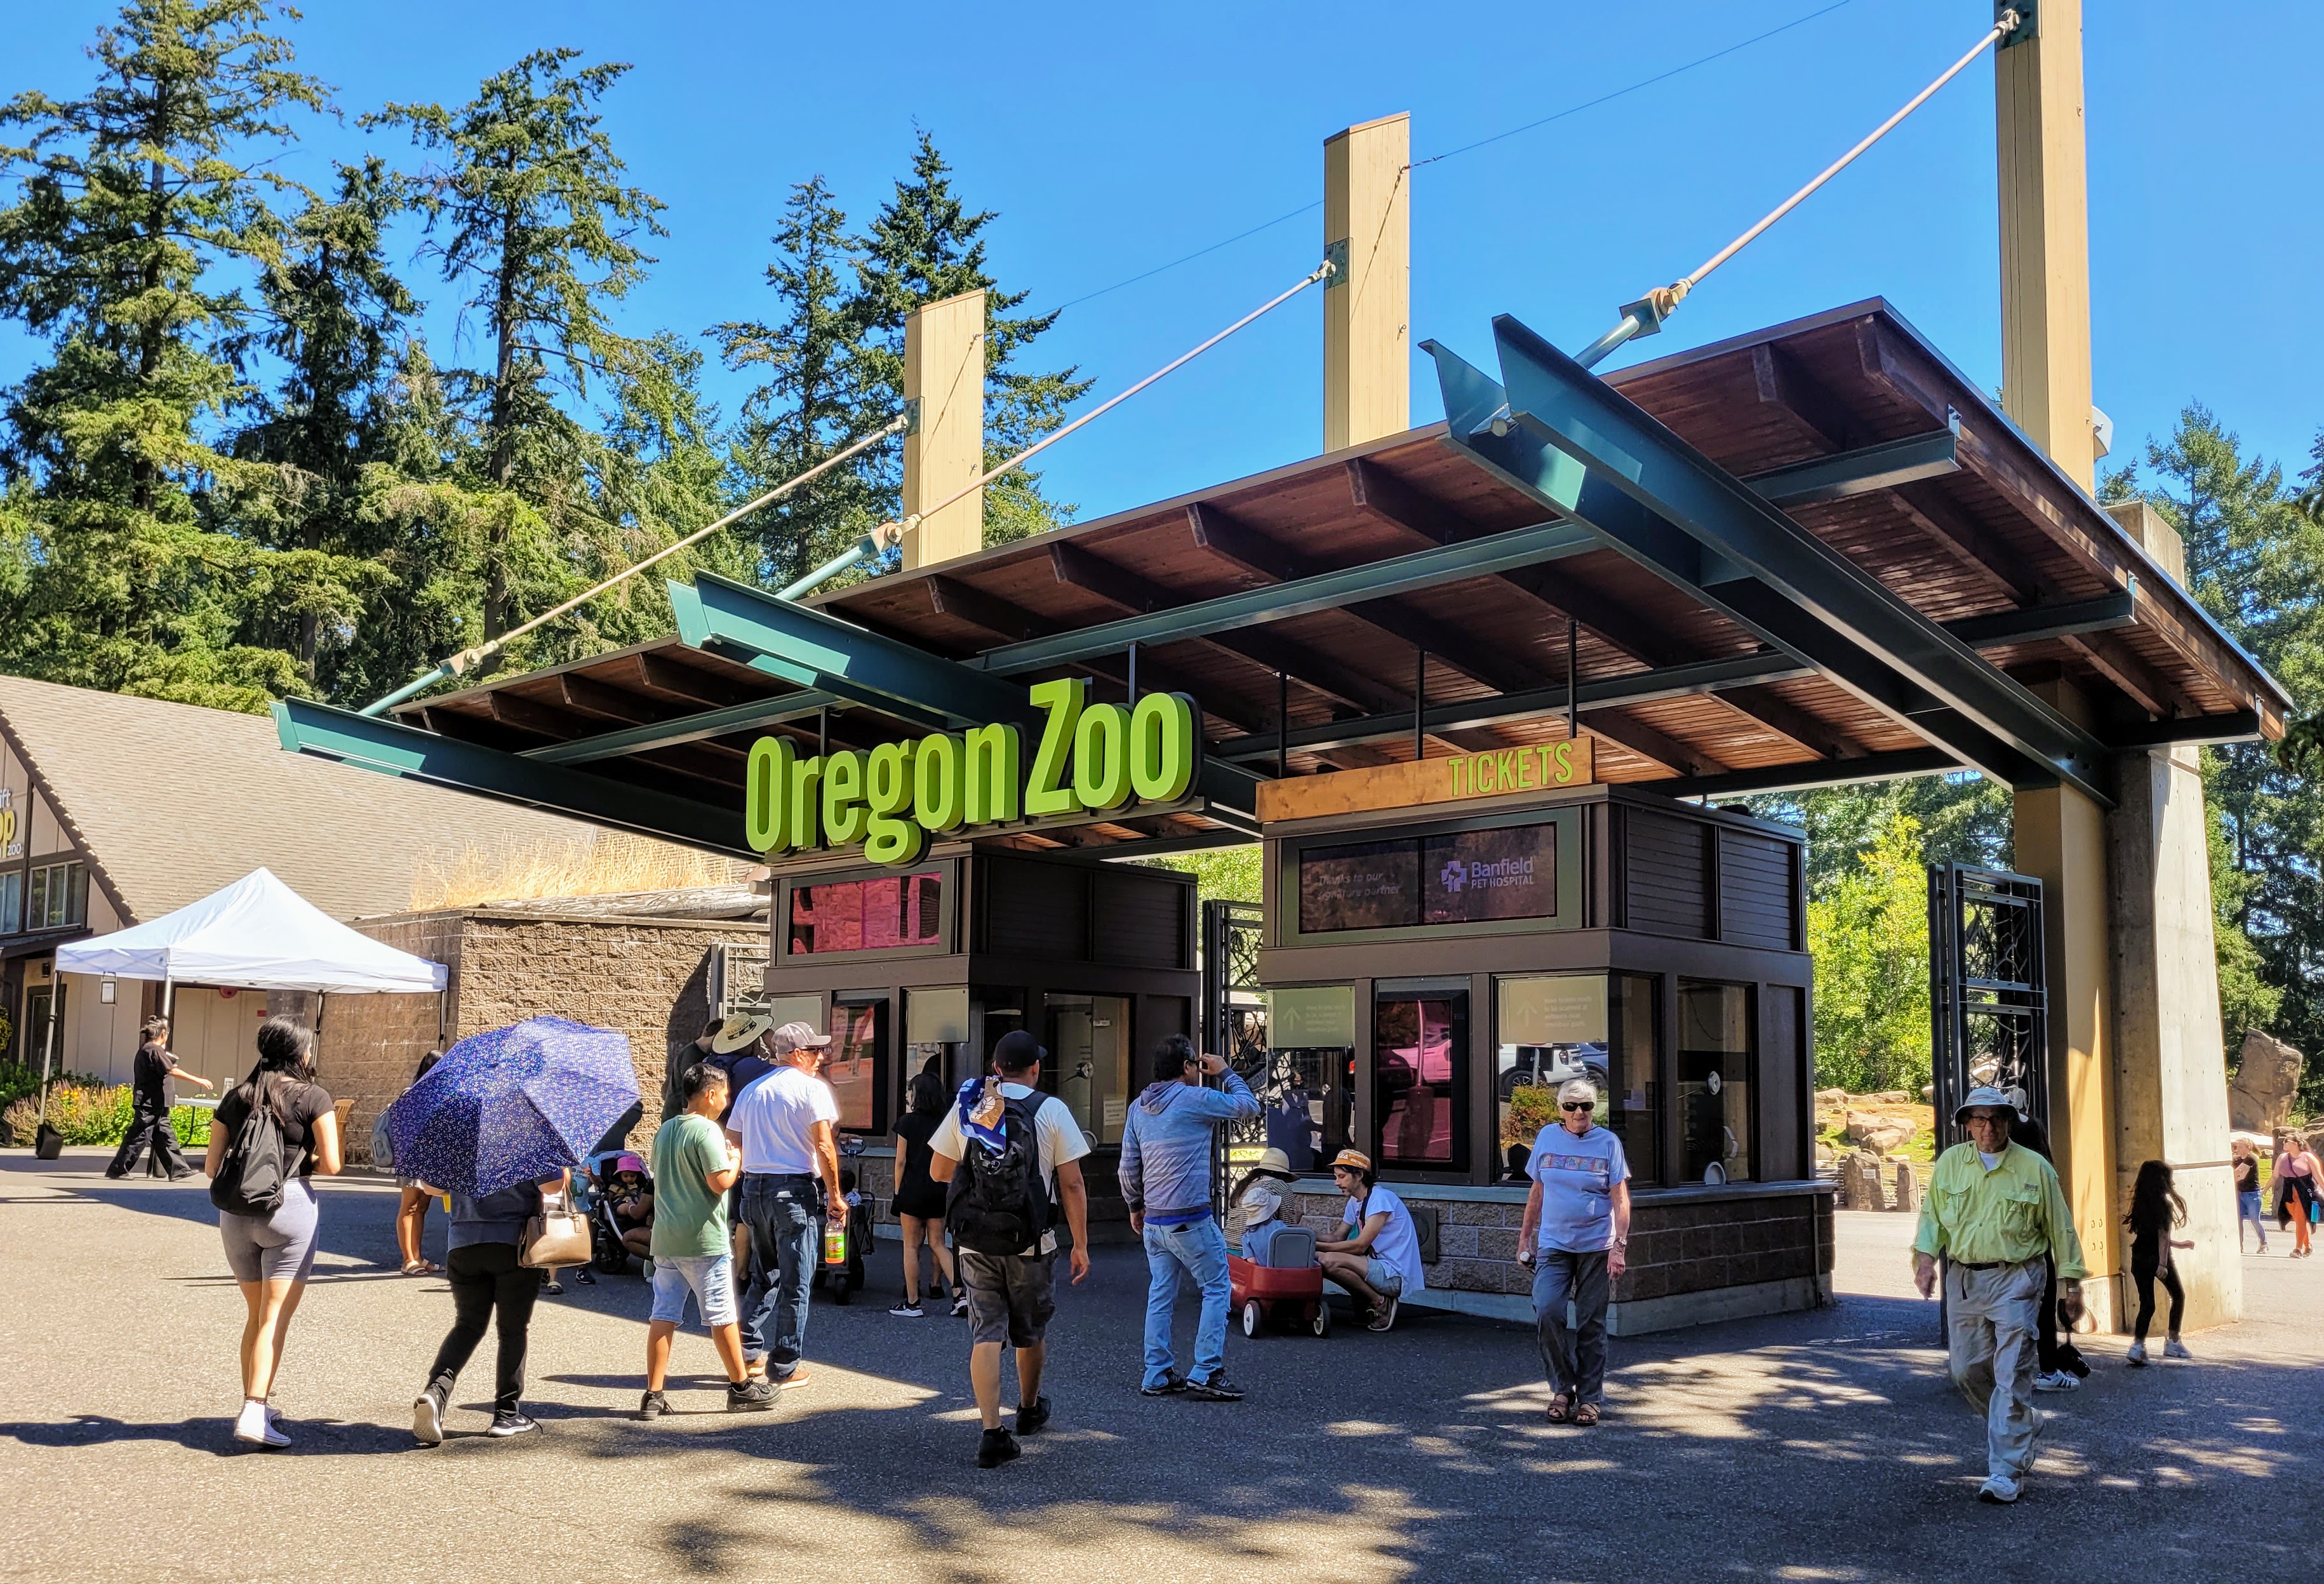 Oregon Zoo Events